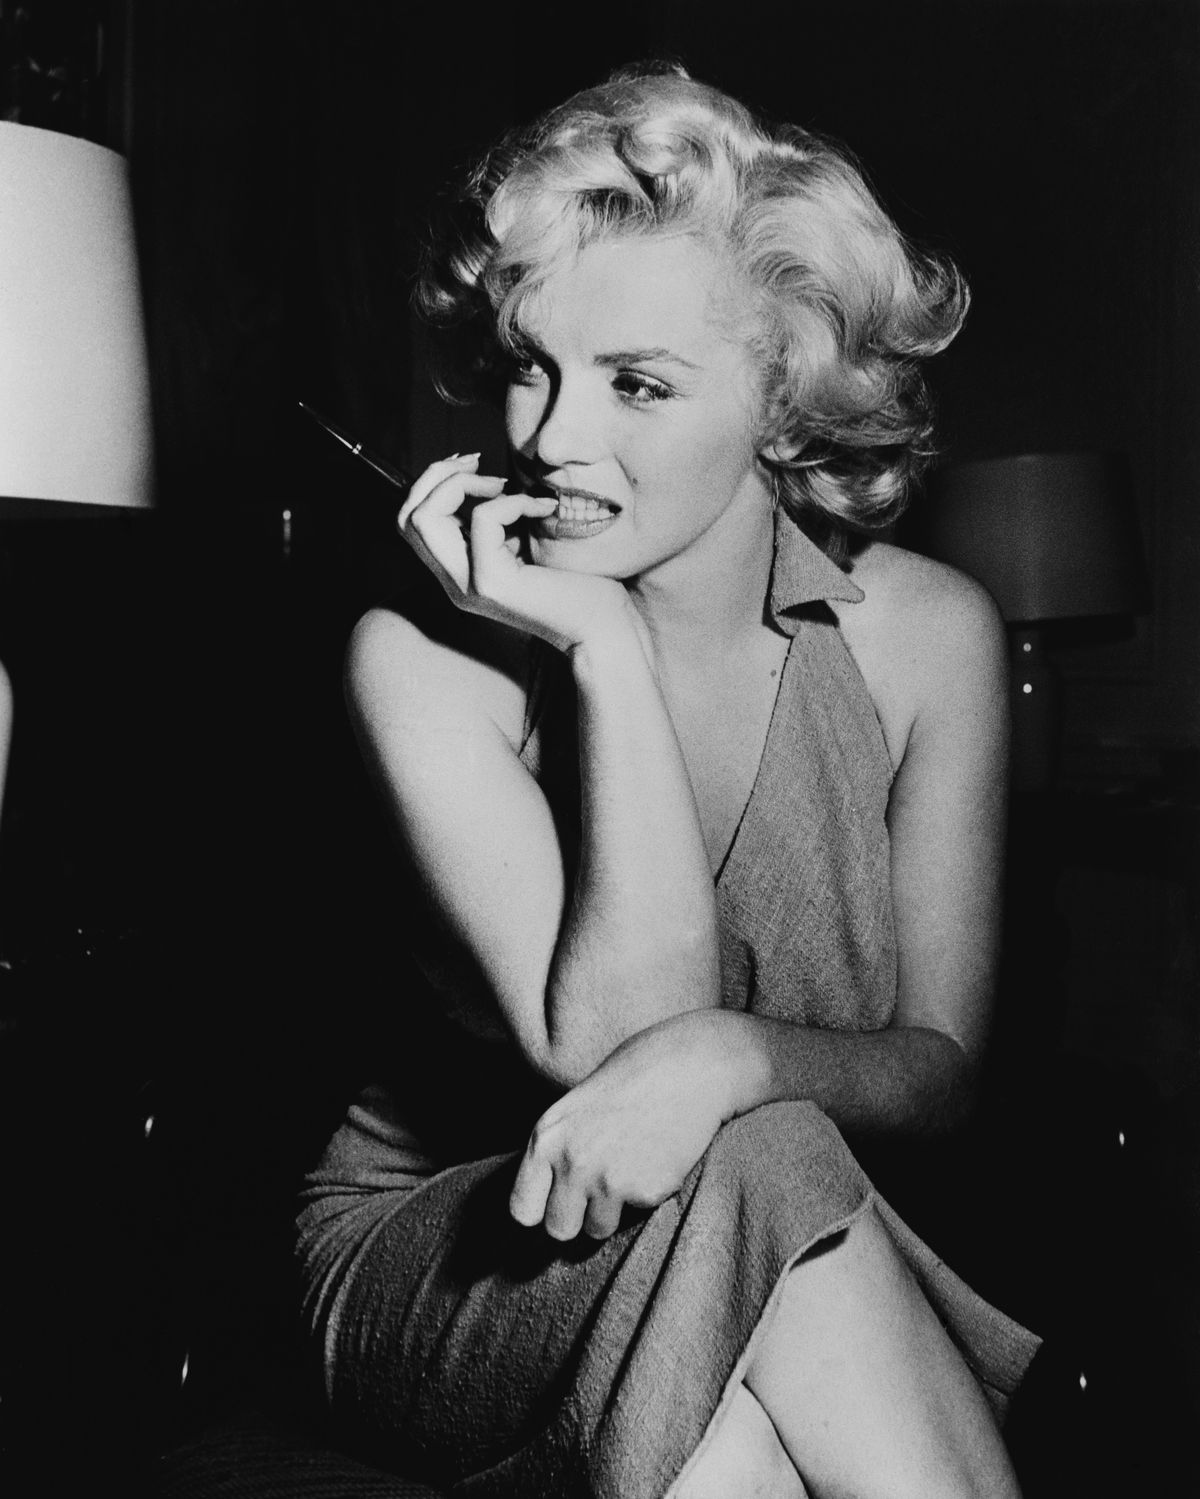 Sexy Blonde Teen Naked - The explosive real story behind Marilyn Monroe film Blonde